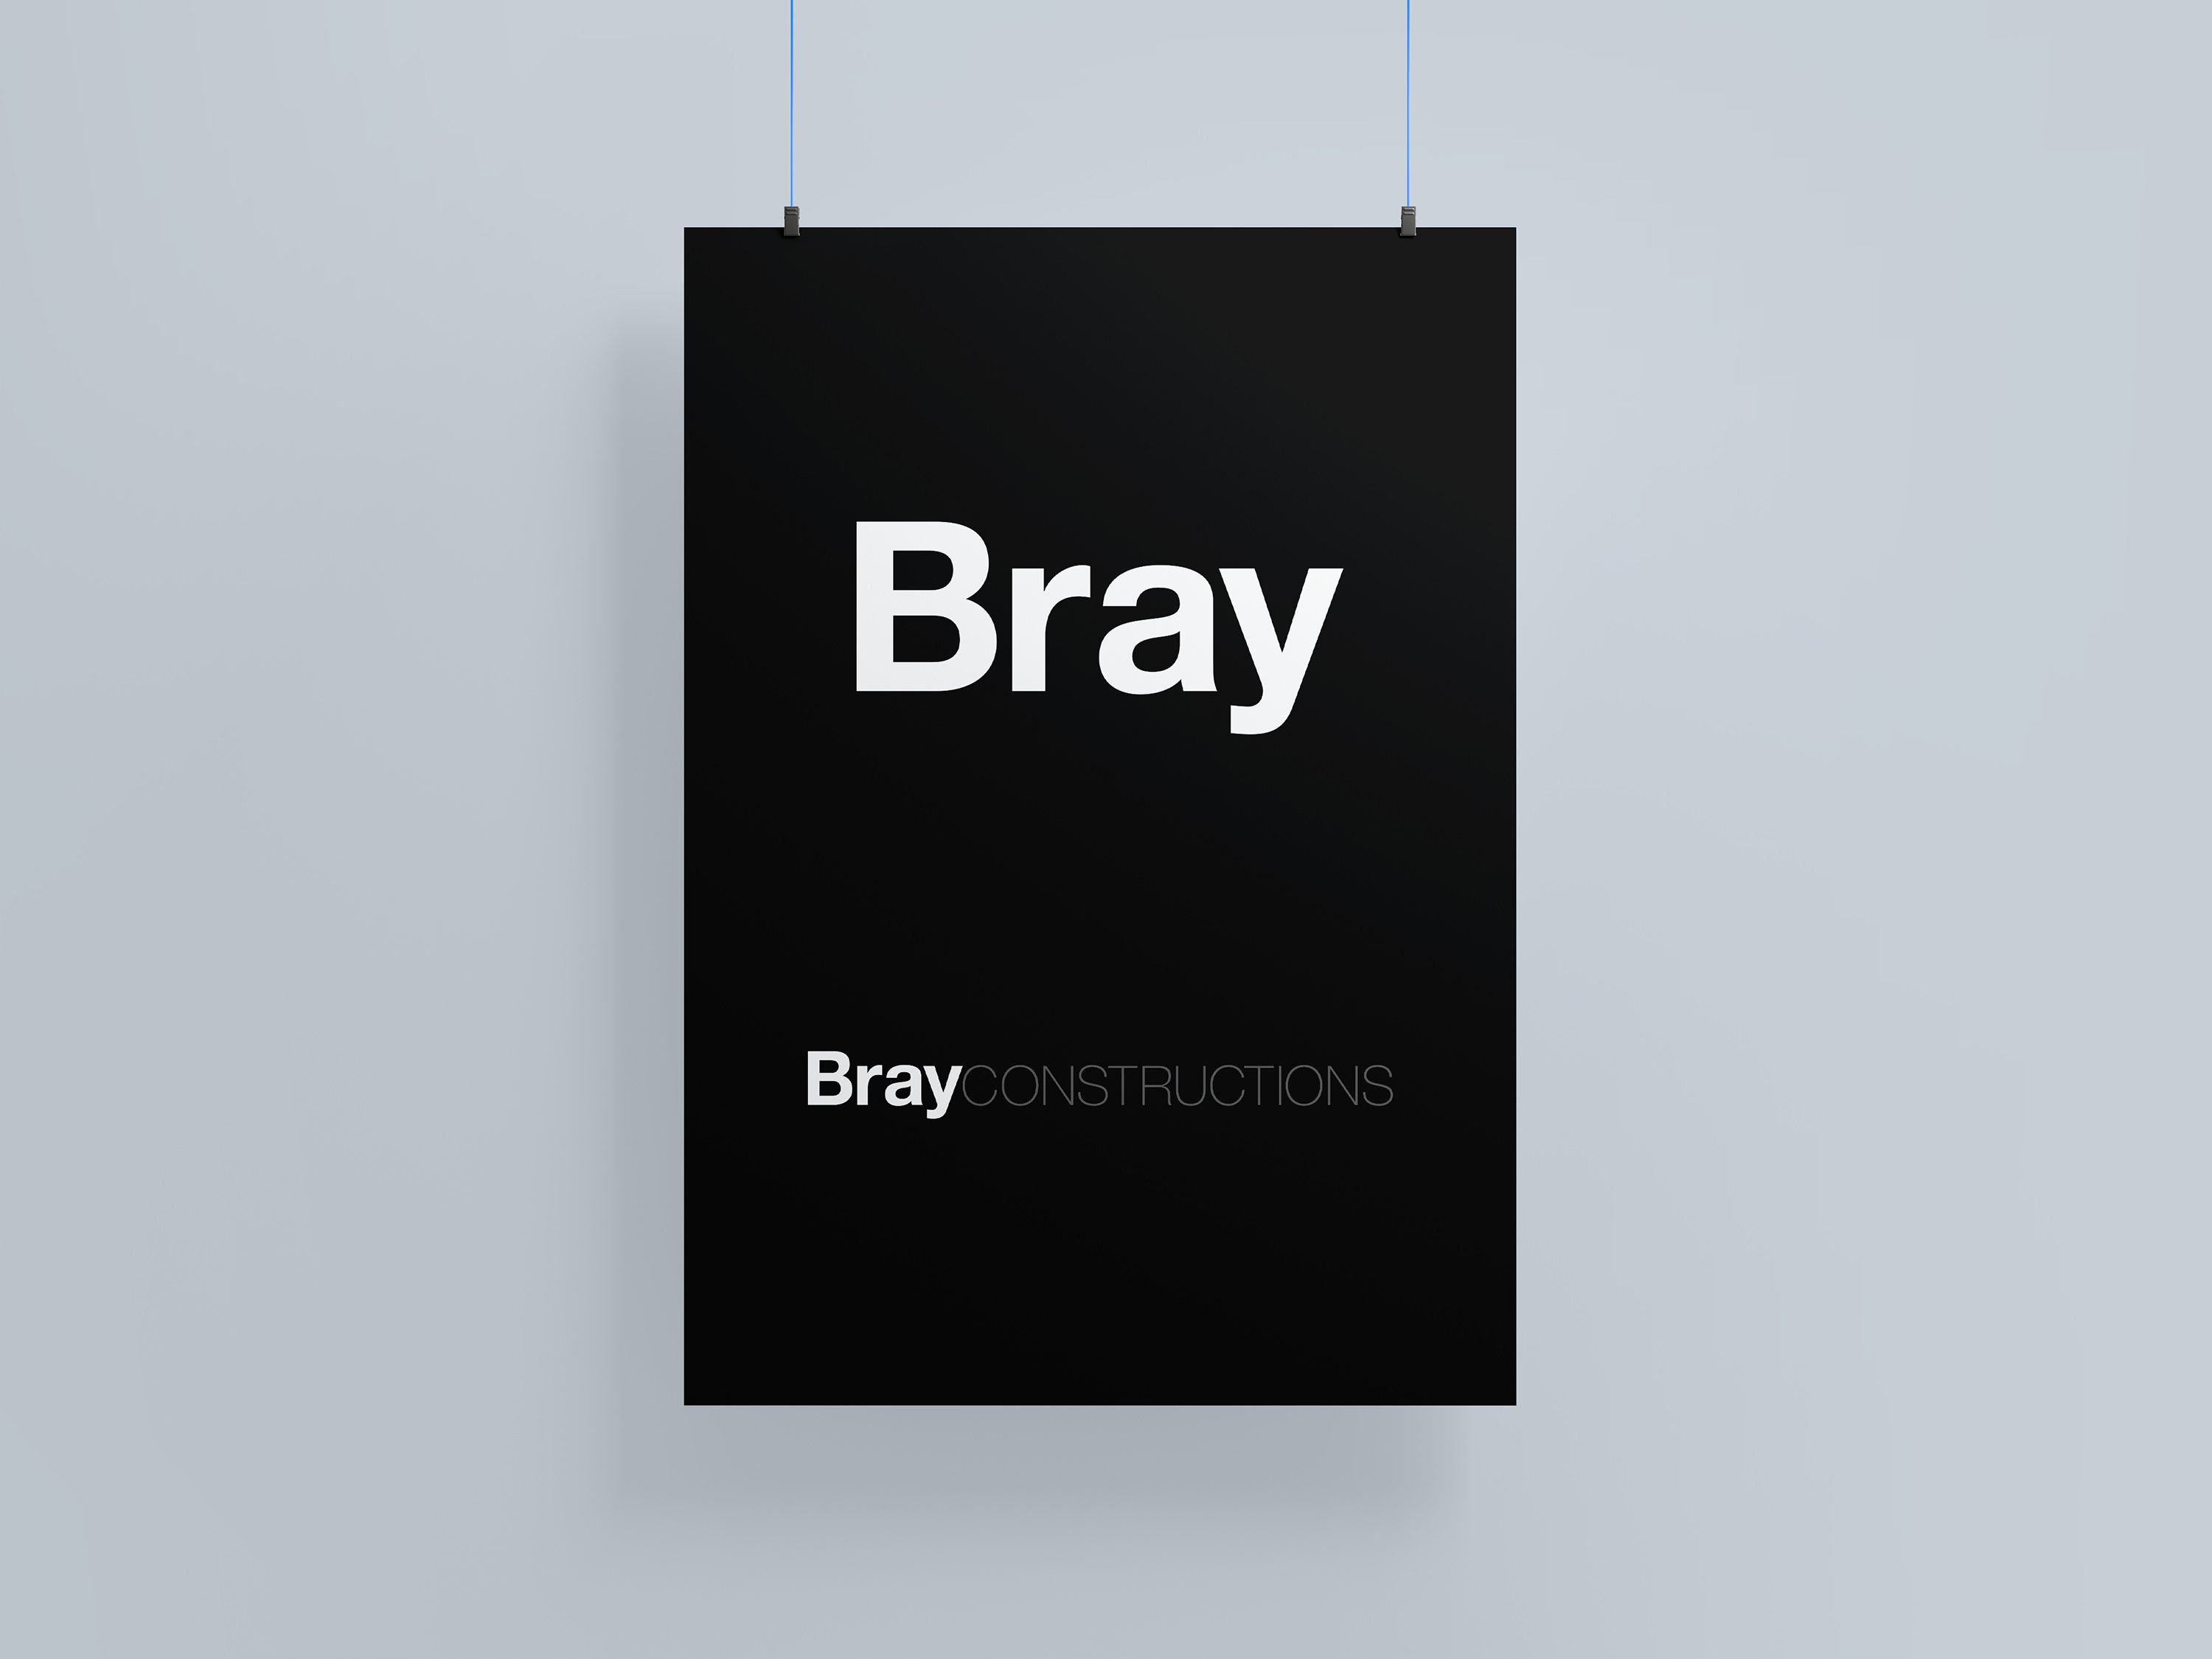 Bray-Constructions white logo version